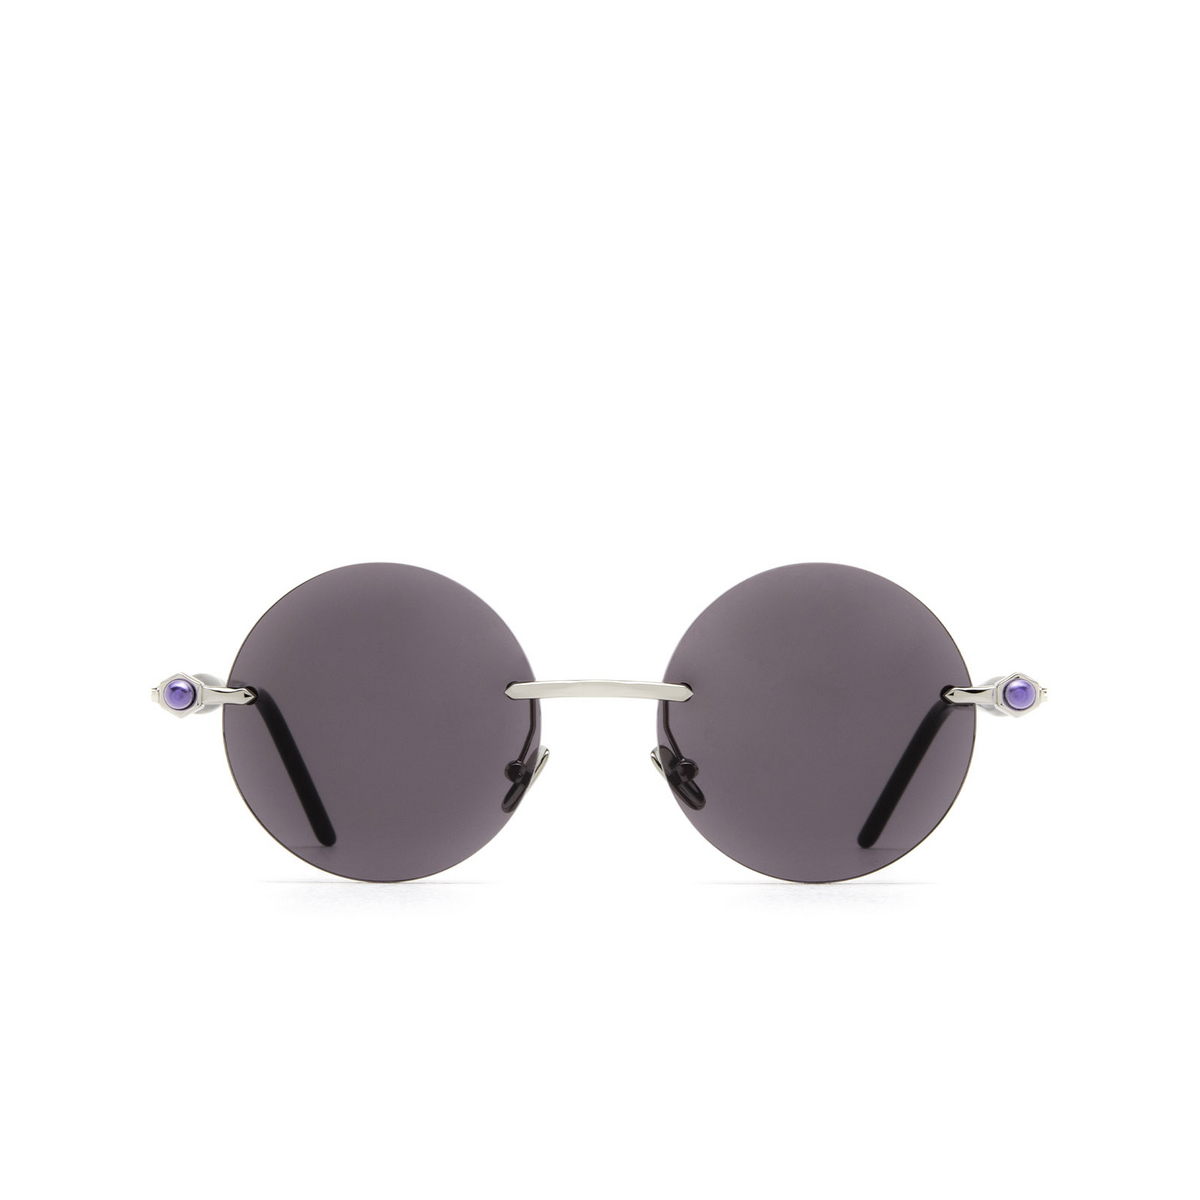 Kuboraum® Round Sunglasses: P50 color Silver & Black Matt Black Shine Si Vb - front view.